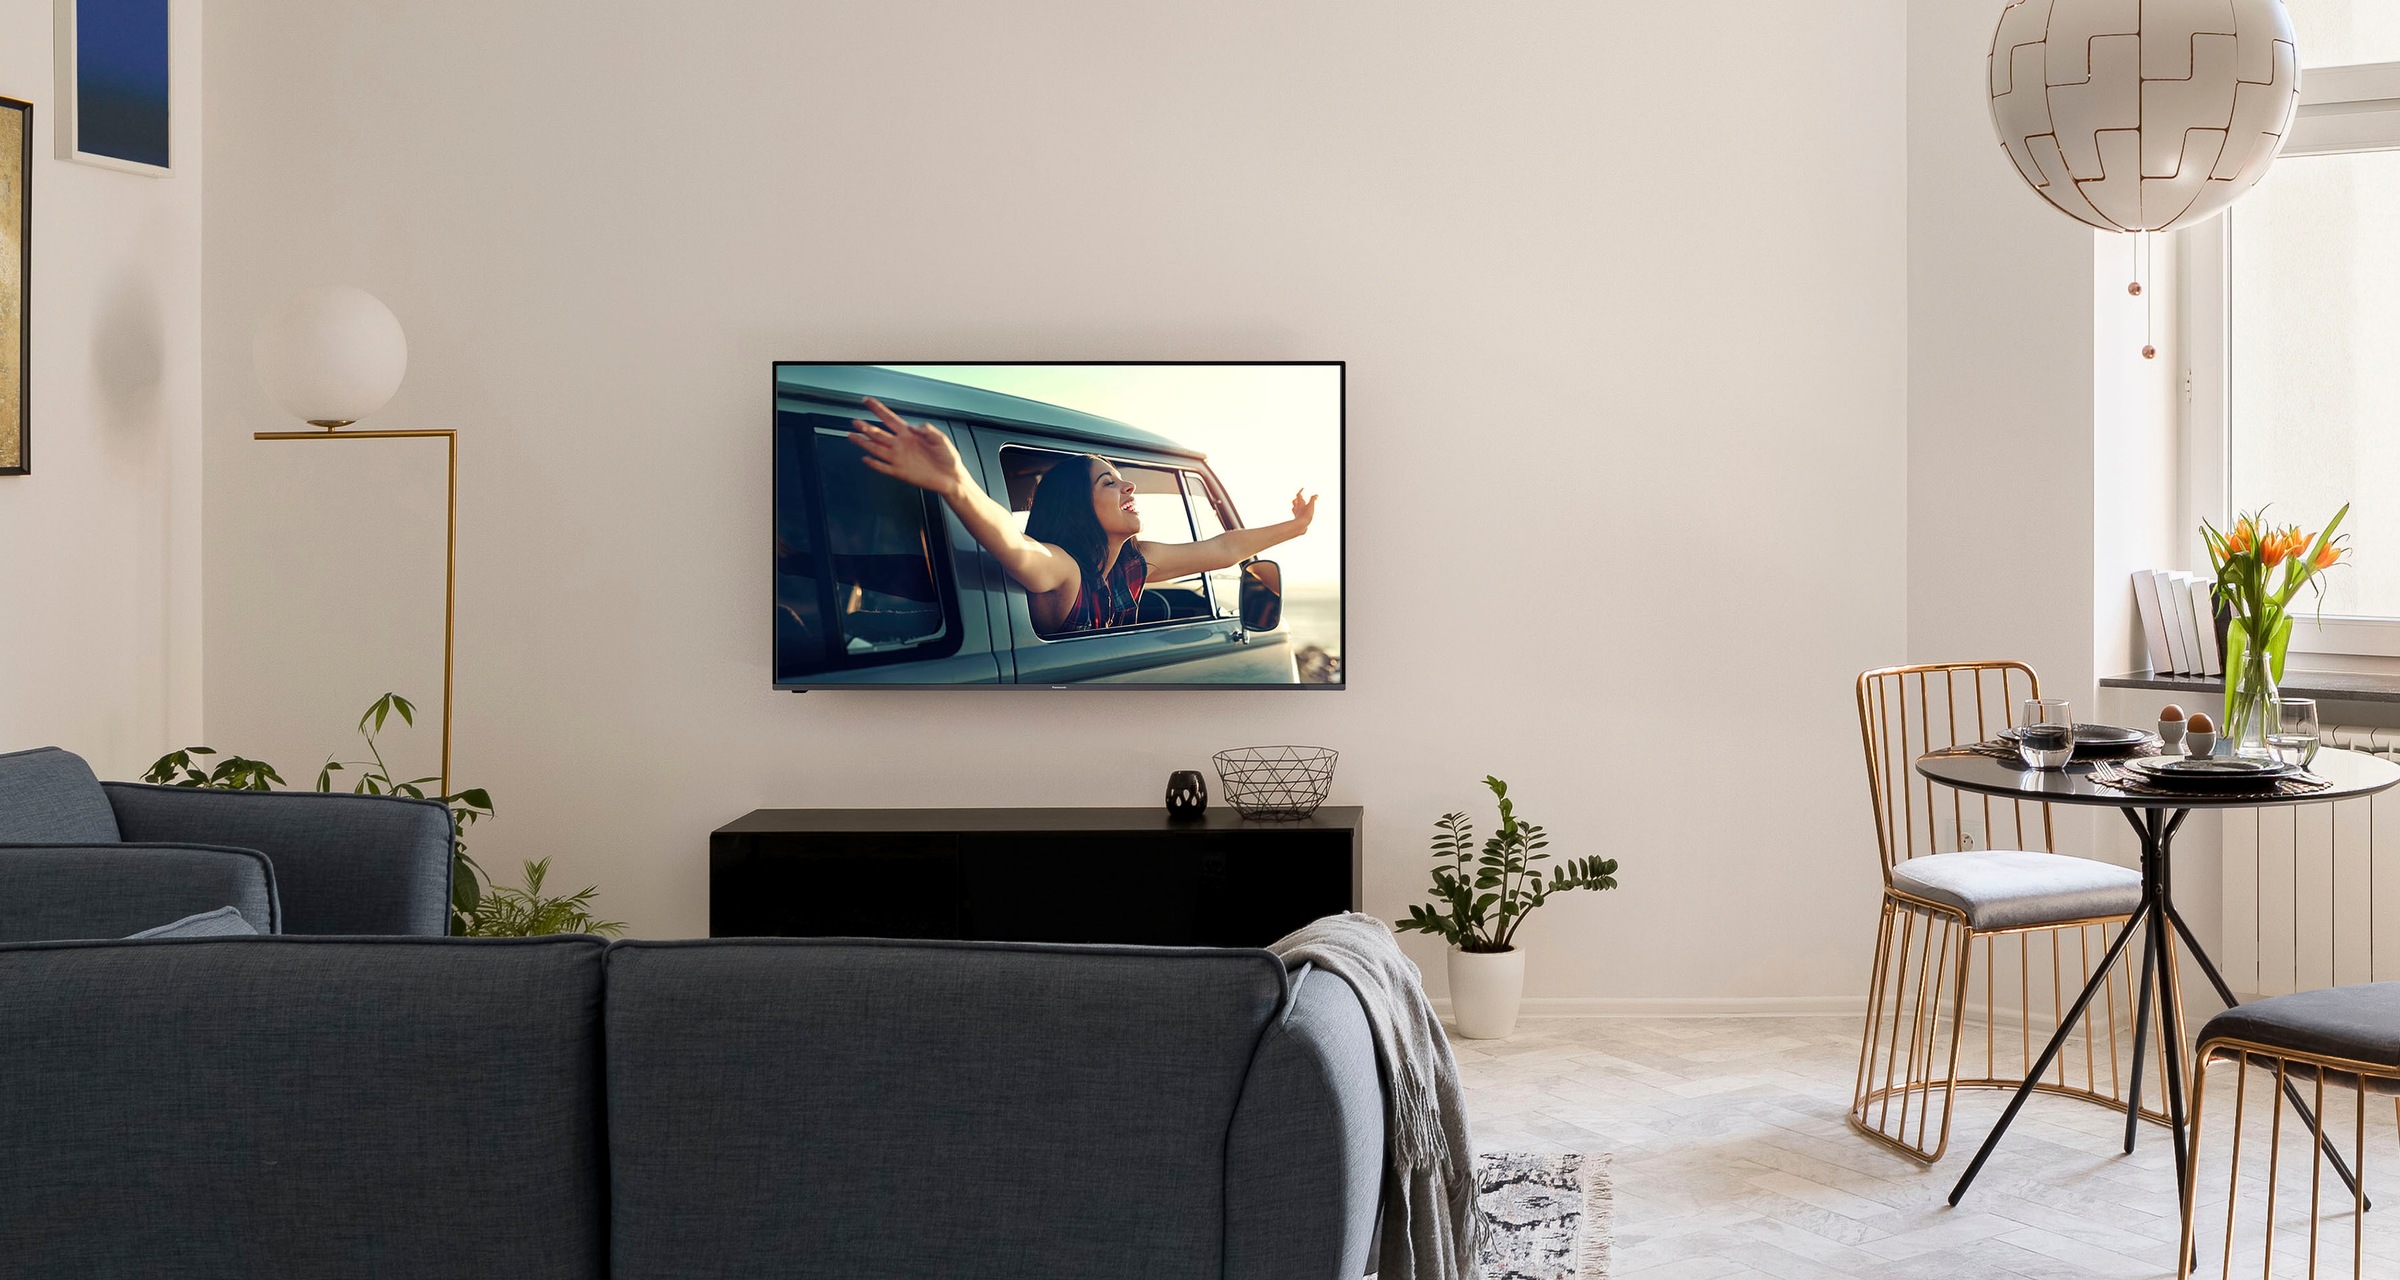 Panasonic LED-Fernseher »TX-65JXW604«, 164 cm/65 Zoll, 4K Ultra HD, Smart-TV